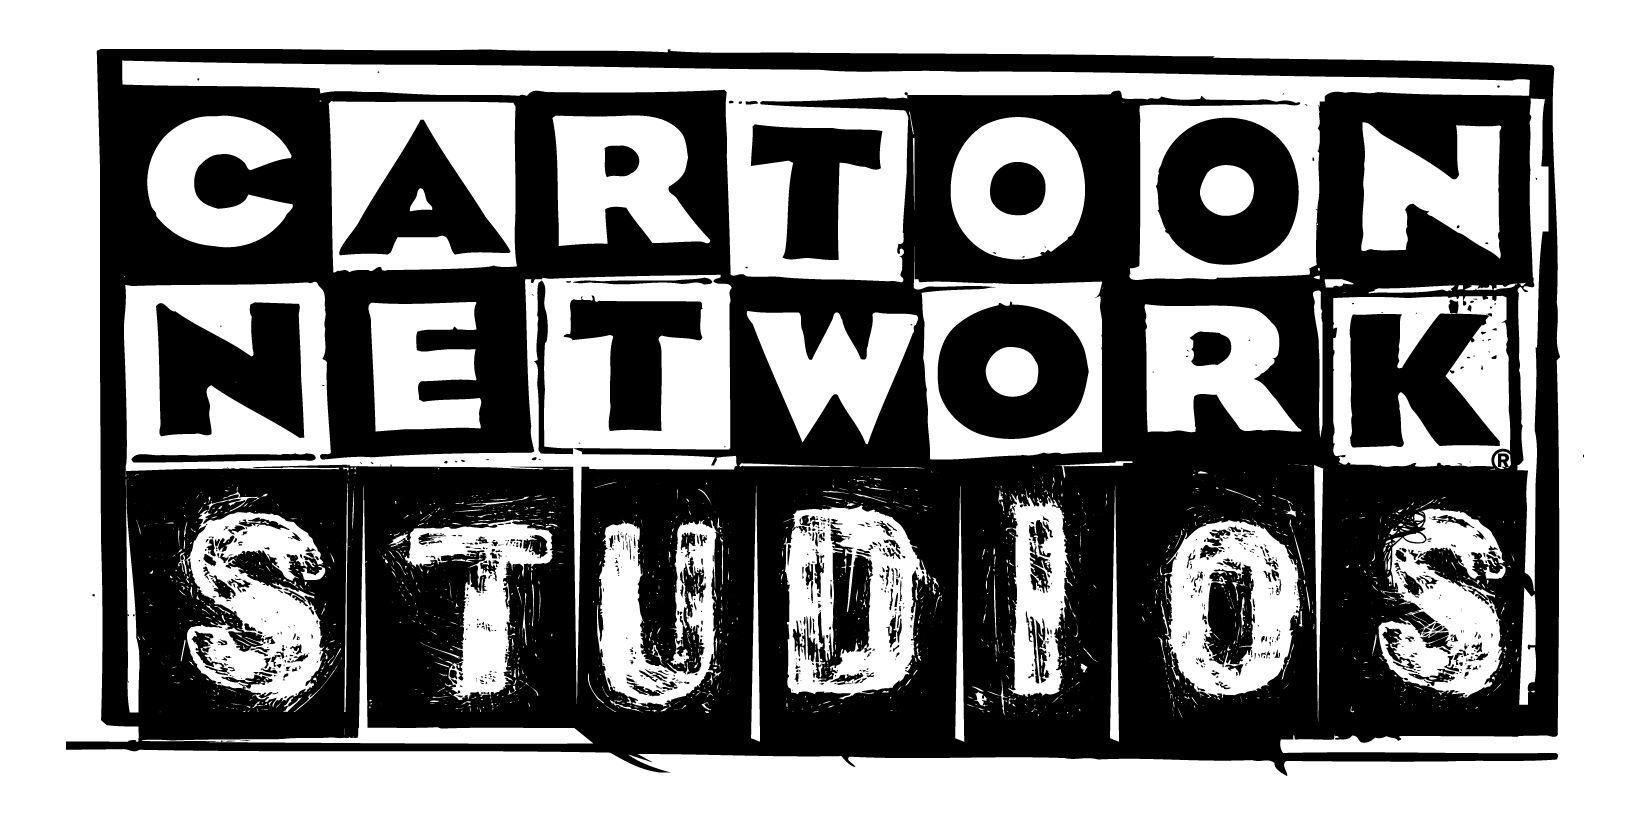 Cartoon Network Studios Logo - Cartoon Network Studios. The Cartoon Network